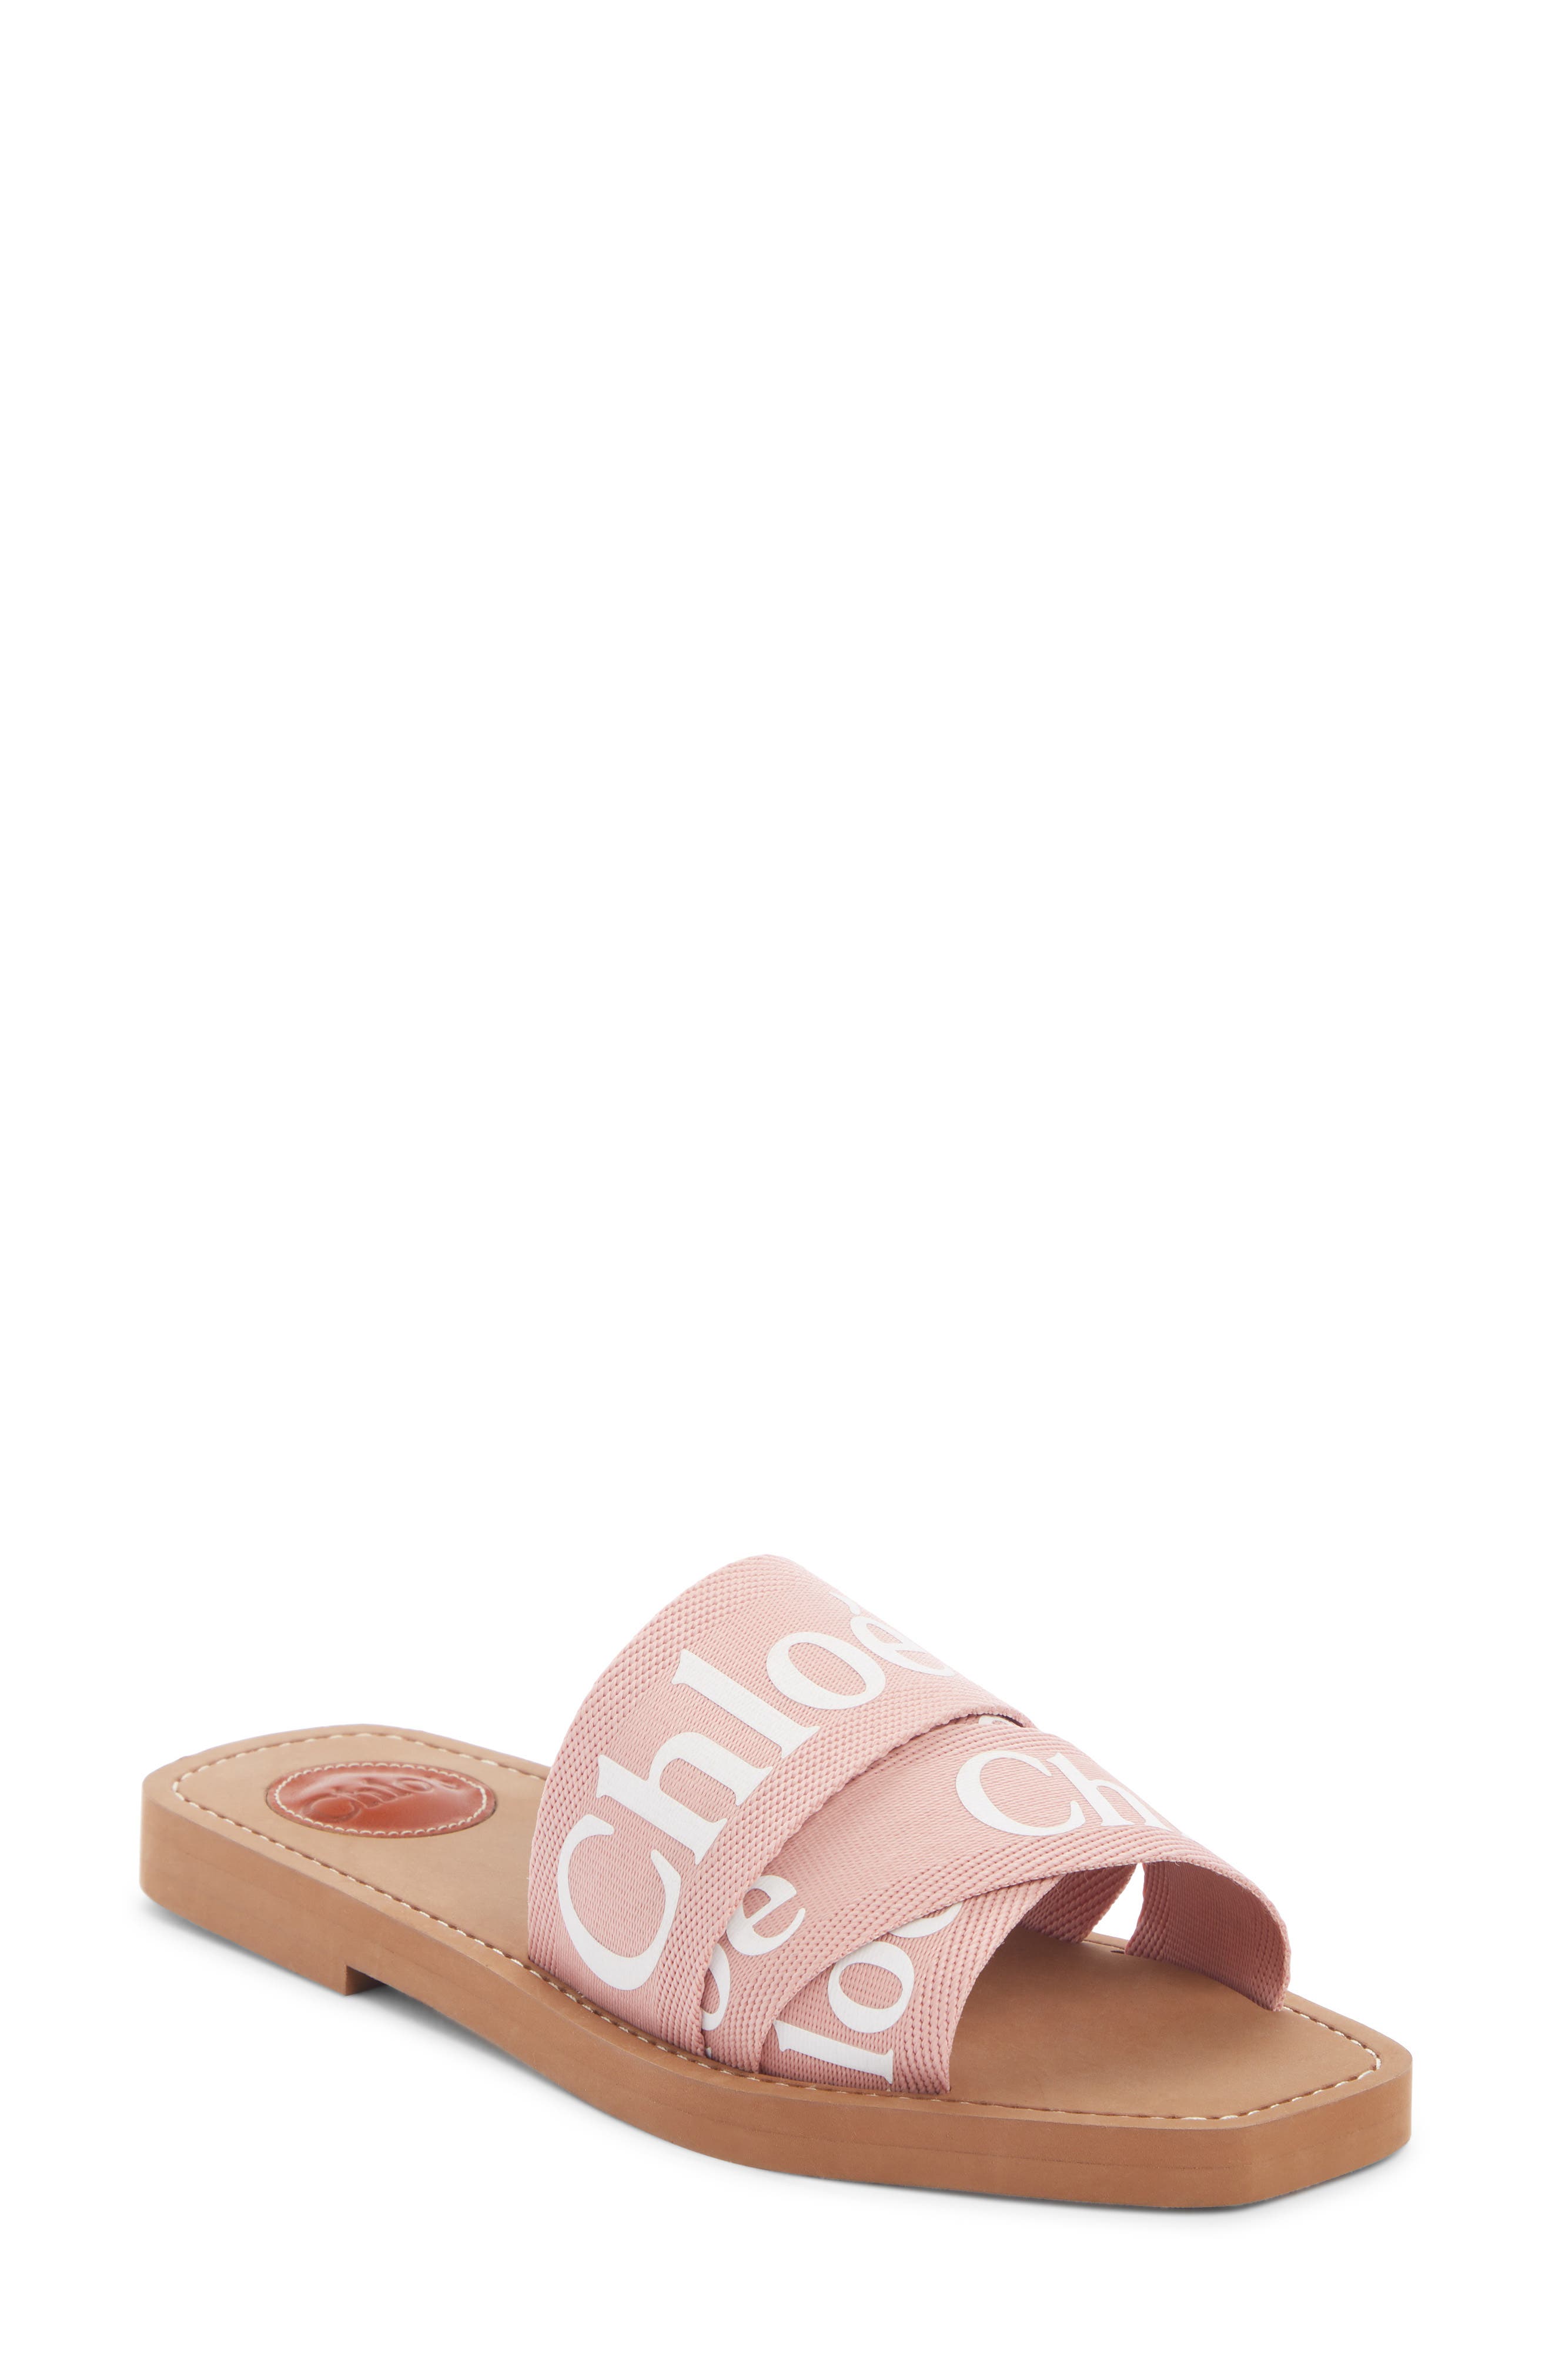 blush pink sandals flat